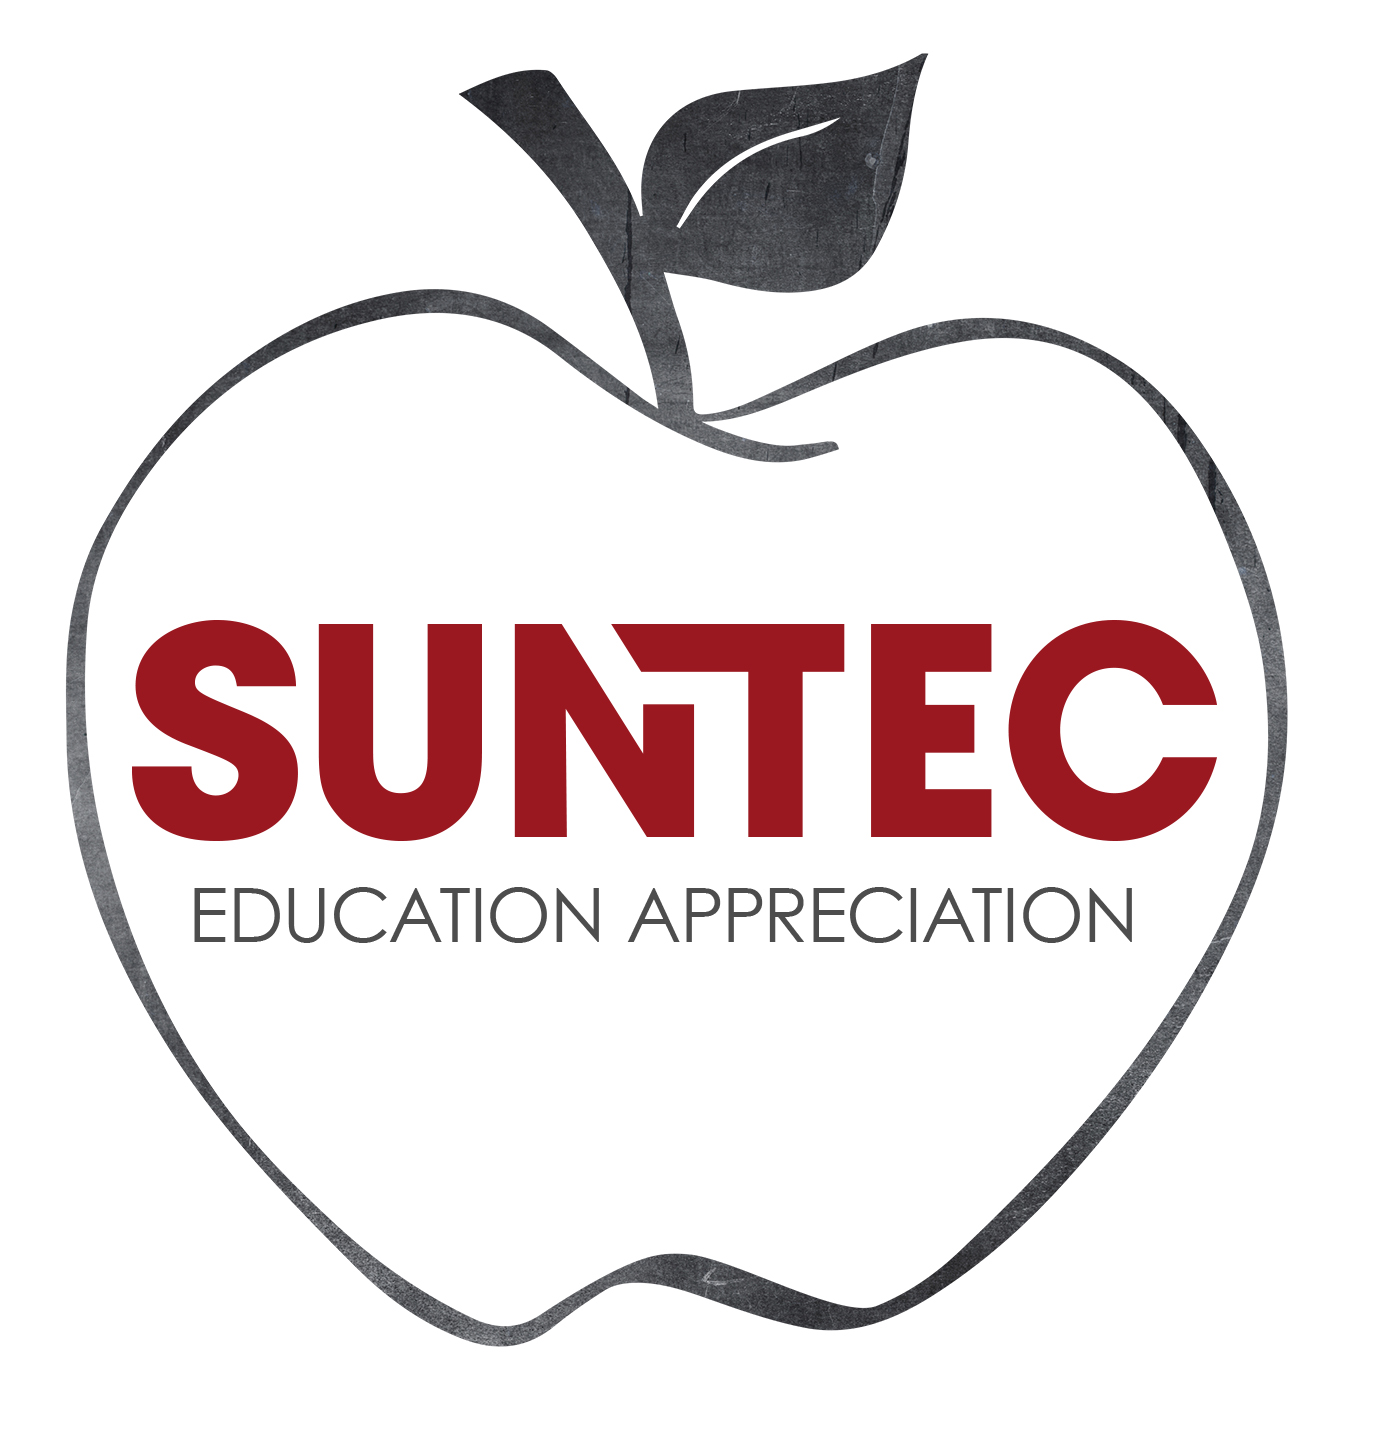 Suntec Education Appreciation